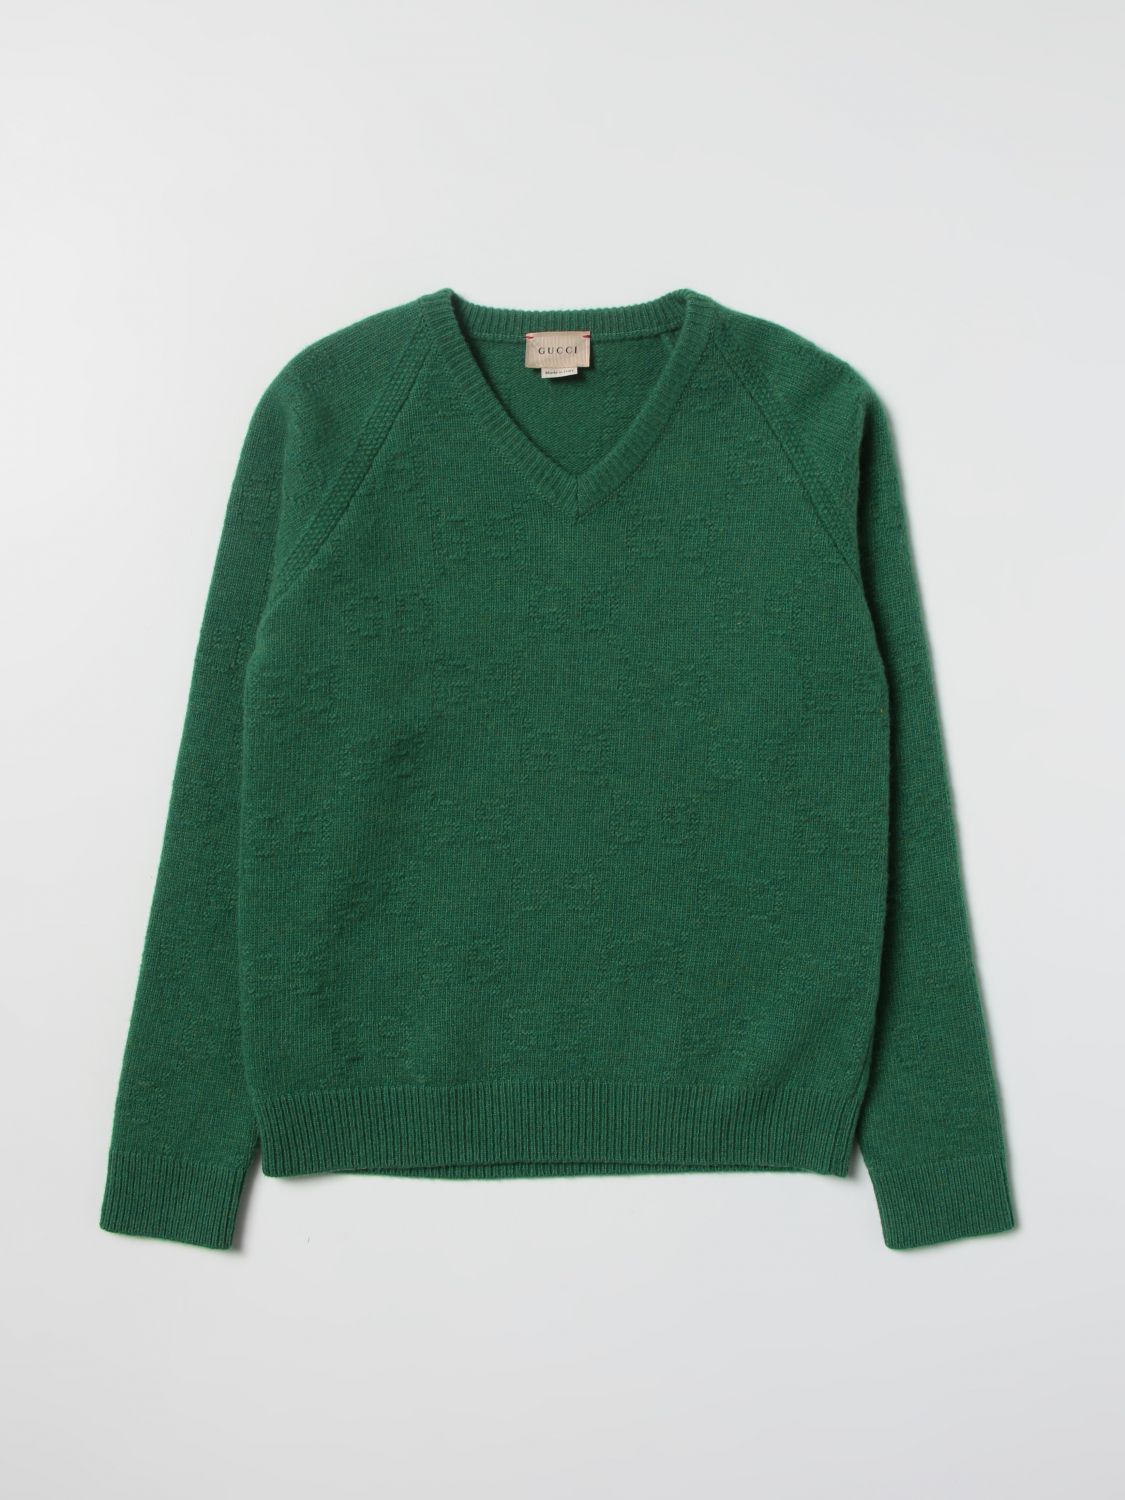 GUCCI: GG wool sweater - Green | Gucci sweater 691841XKB5X online on  